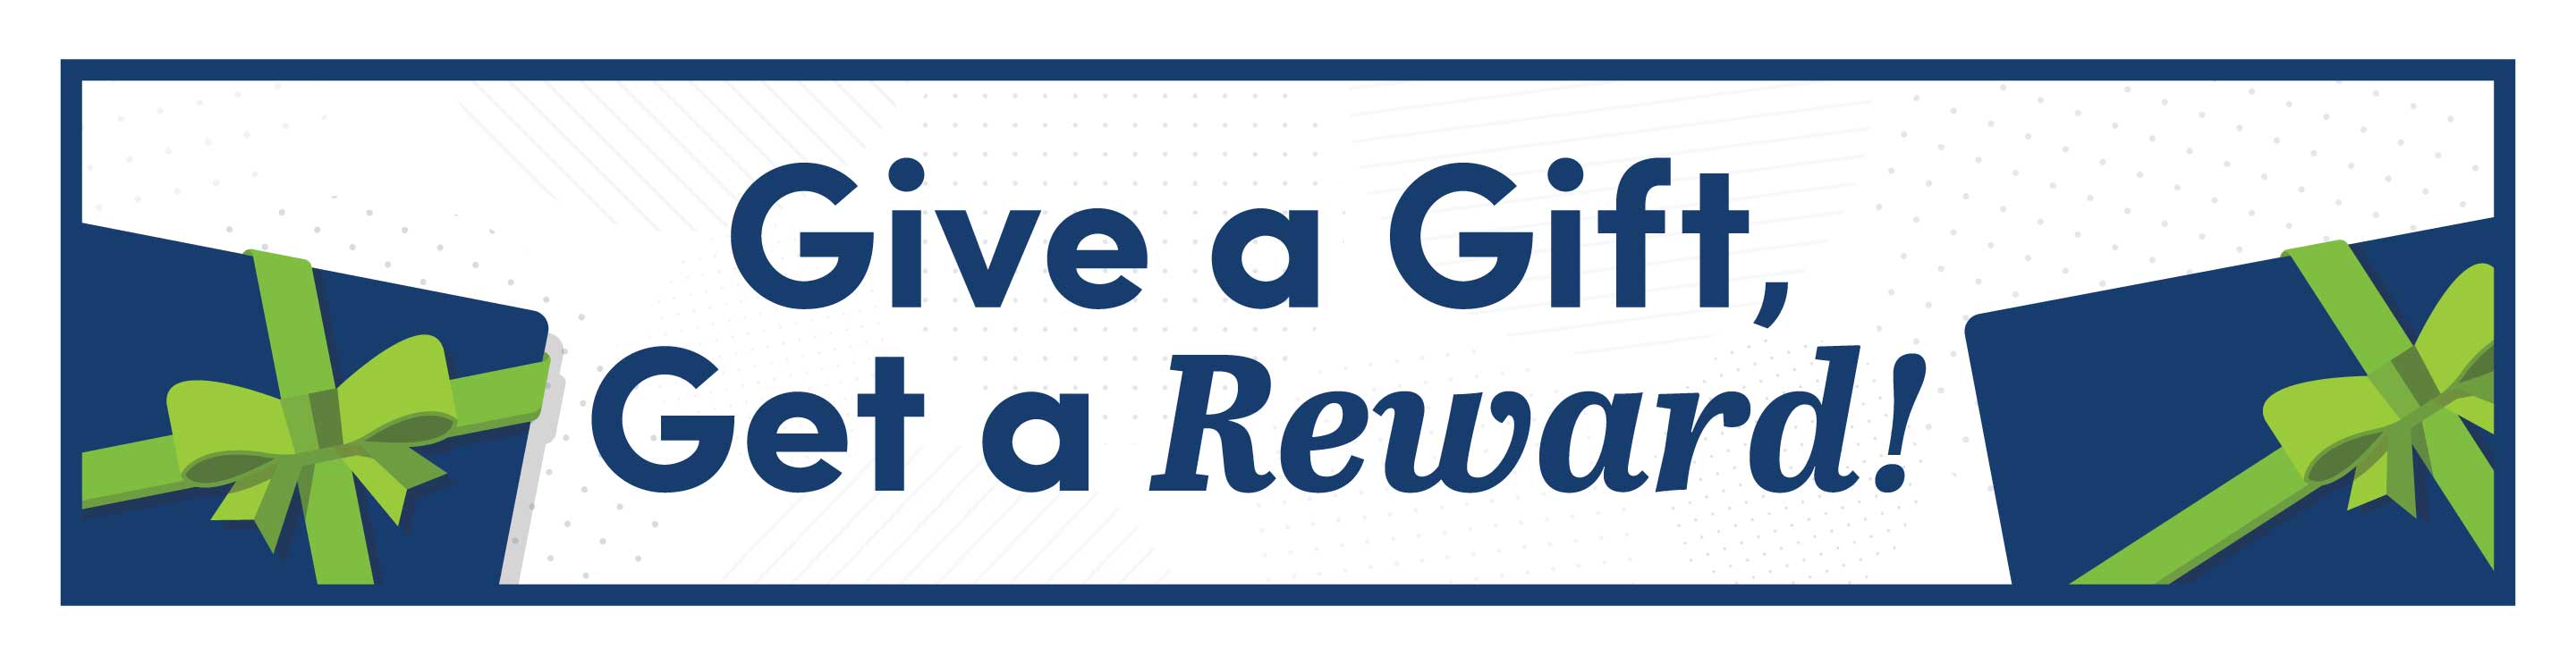 Give a gift, get a reward!